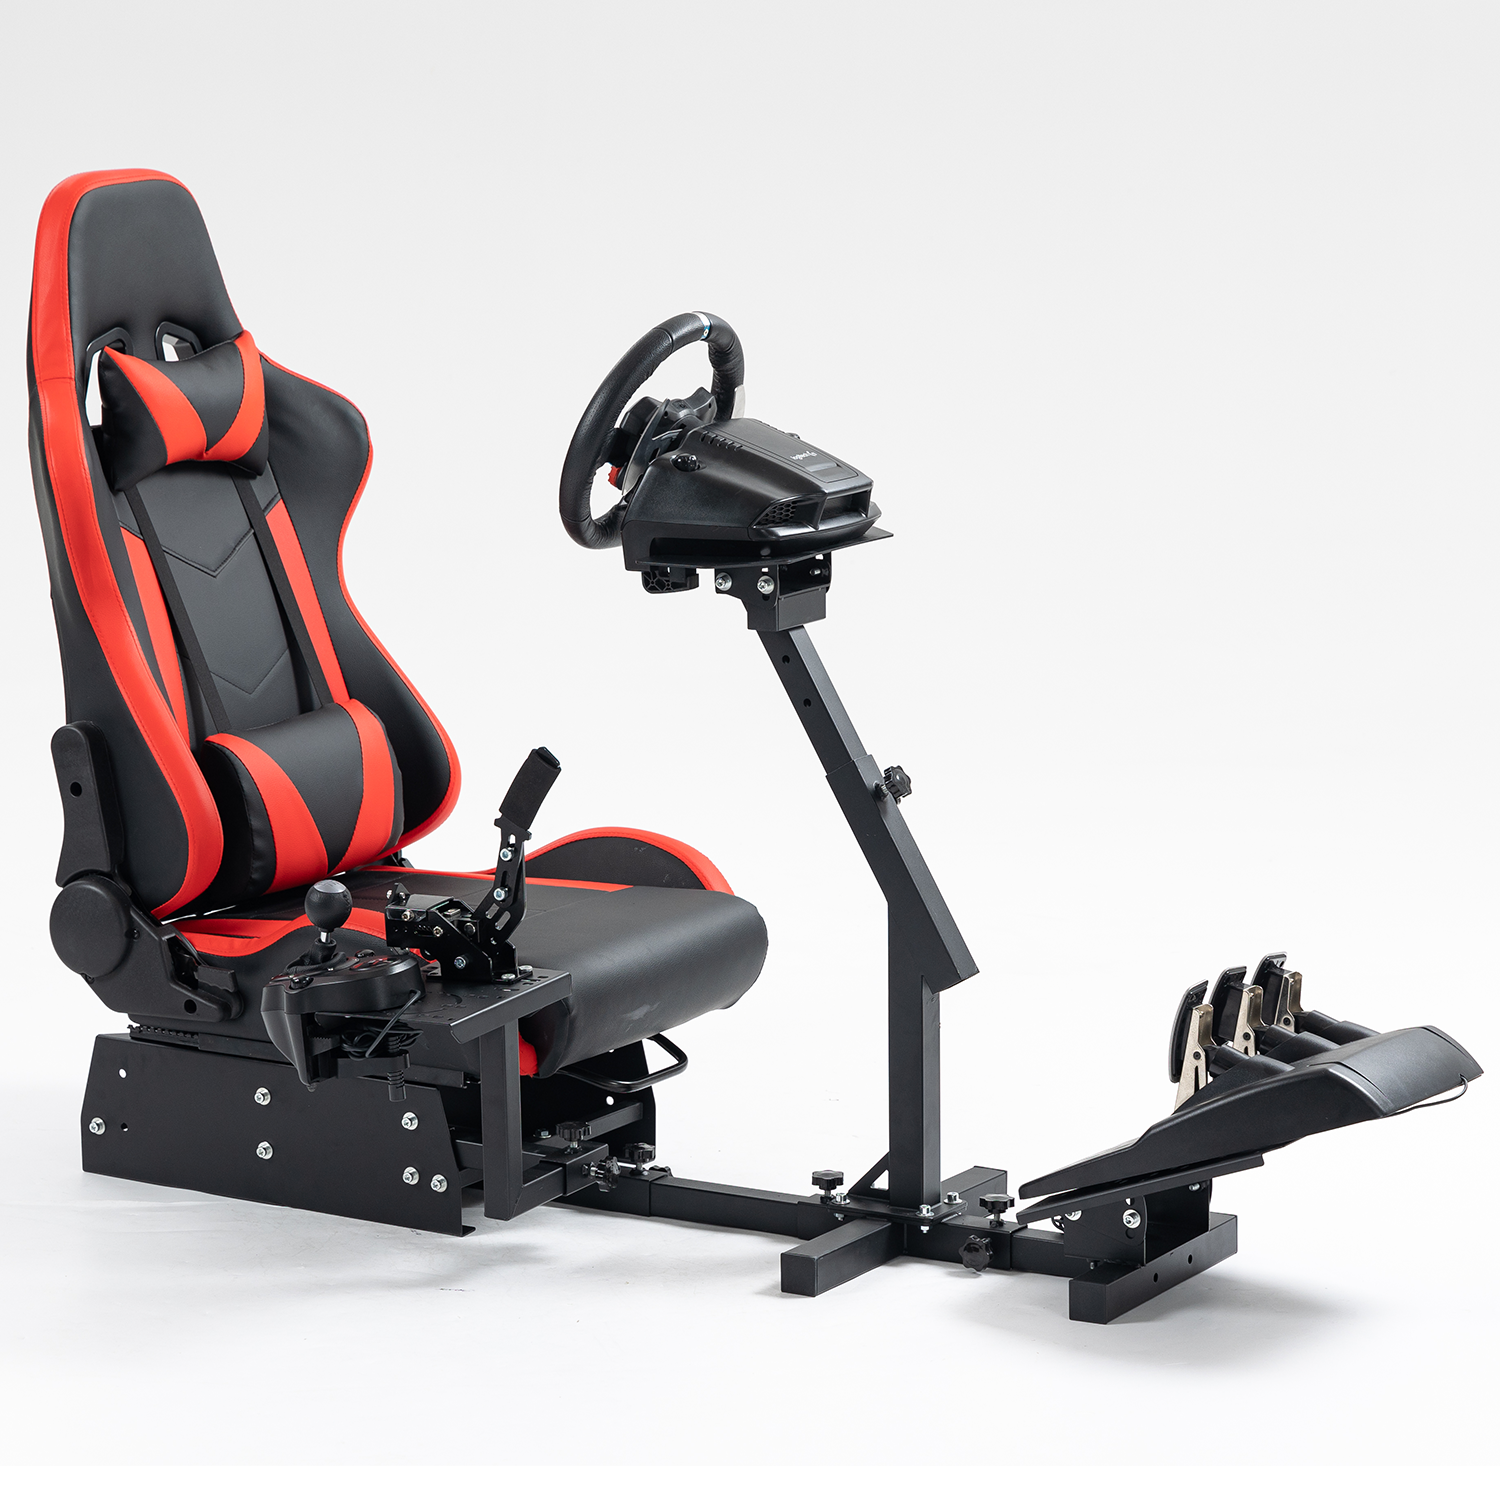 Minneer New Upgrade Racing Simulator Cockpit with Seat Fit Logitech Thrustmaster